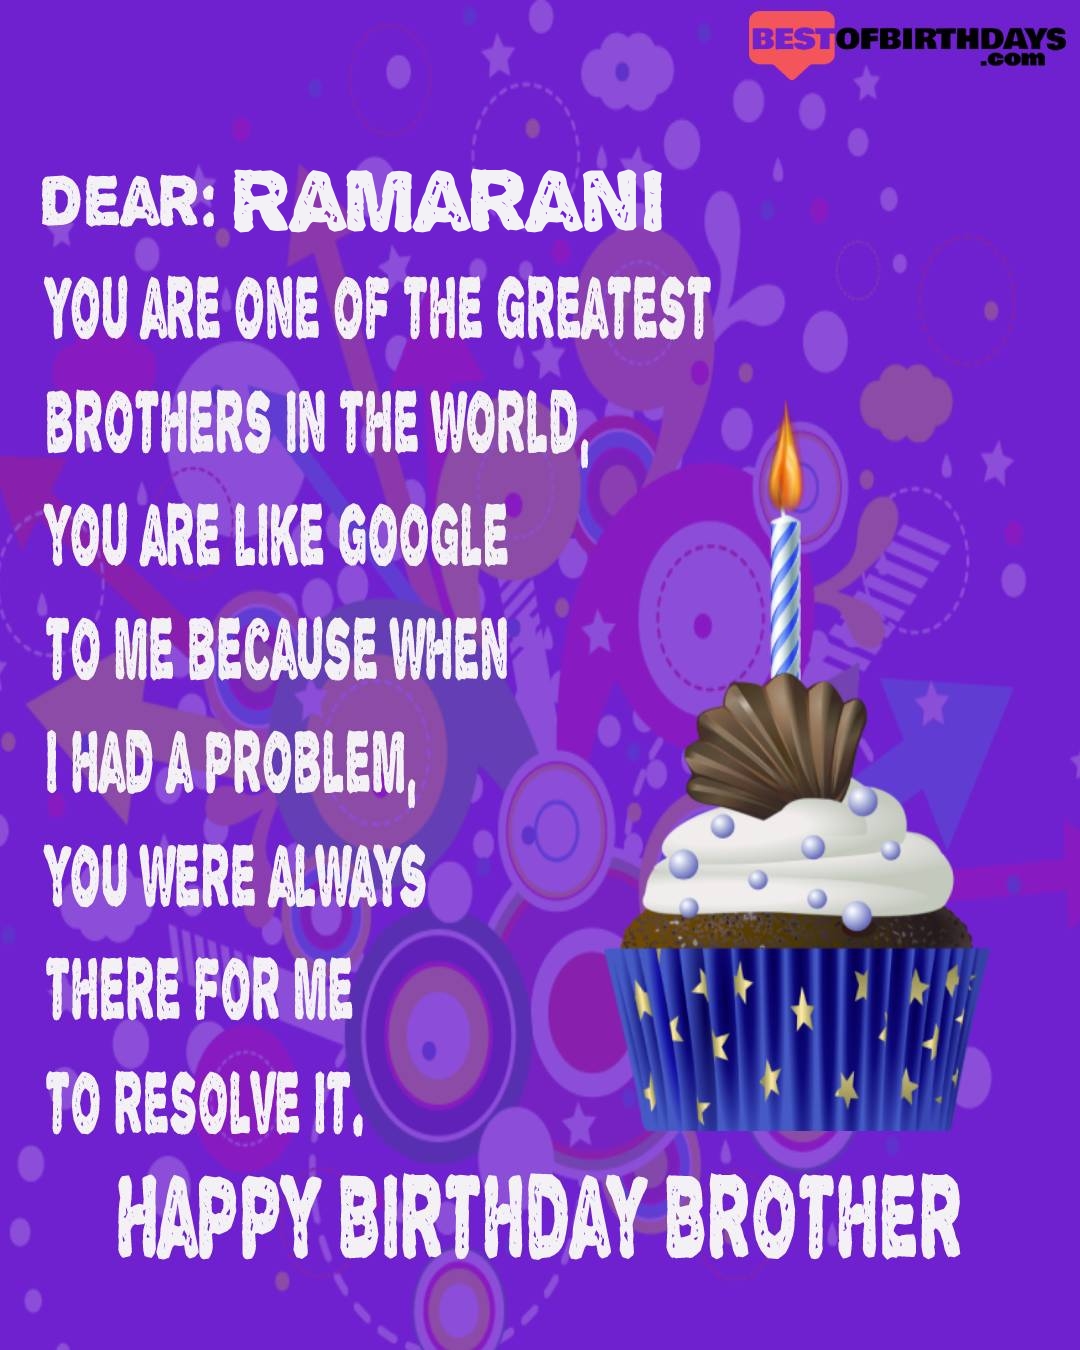 Happy birthday ramarani bhai brother bro